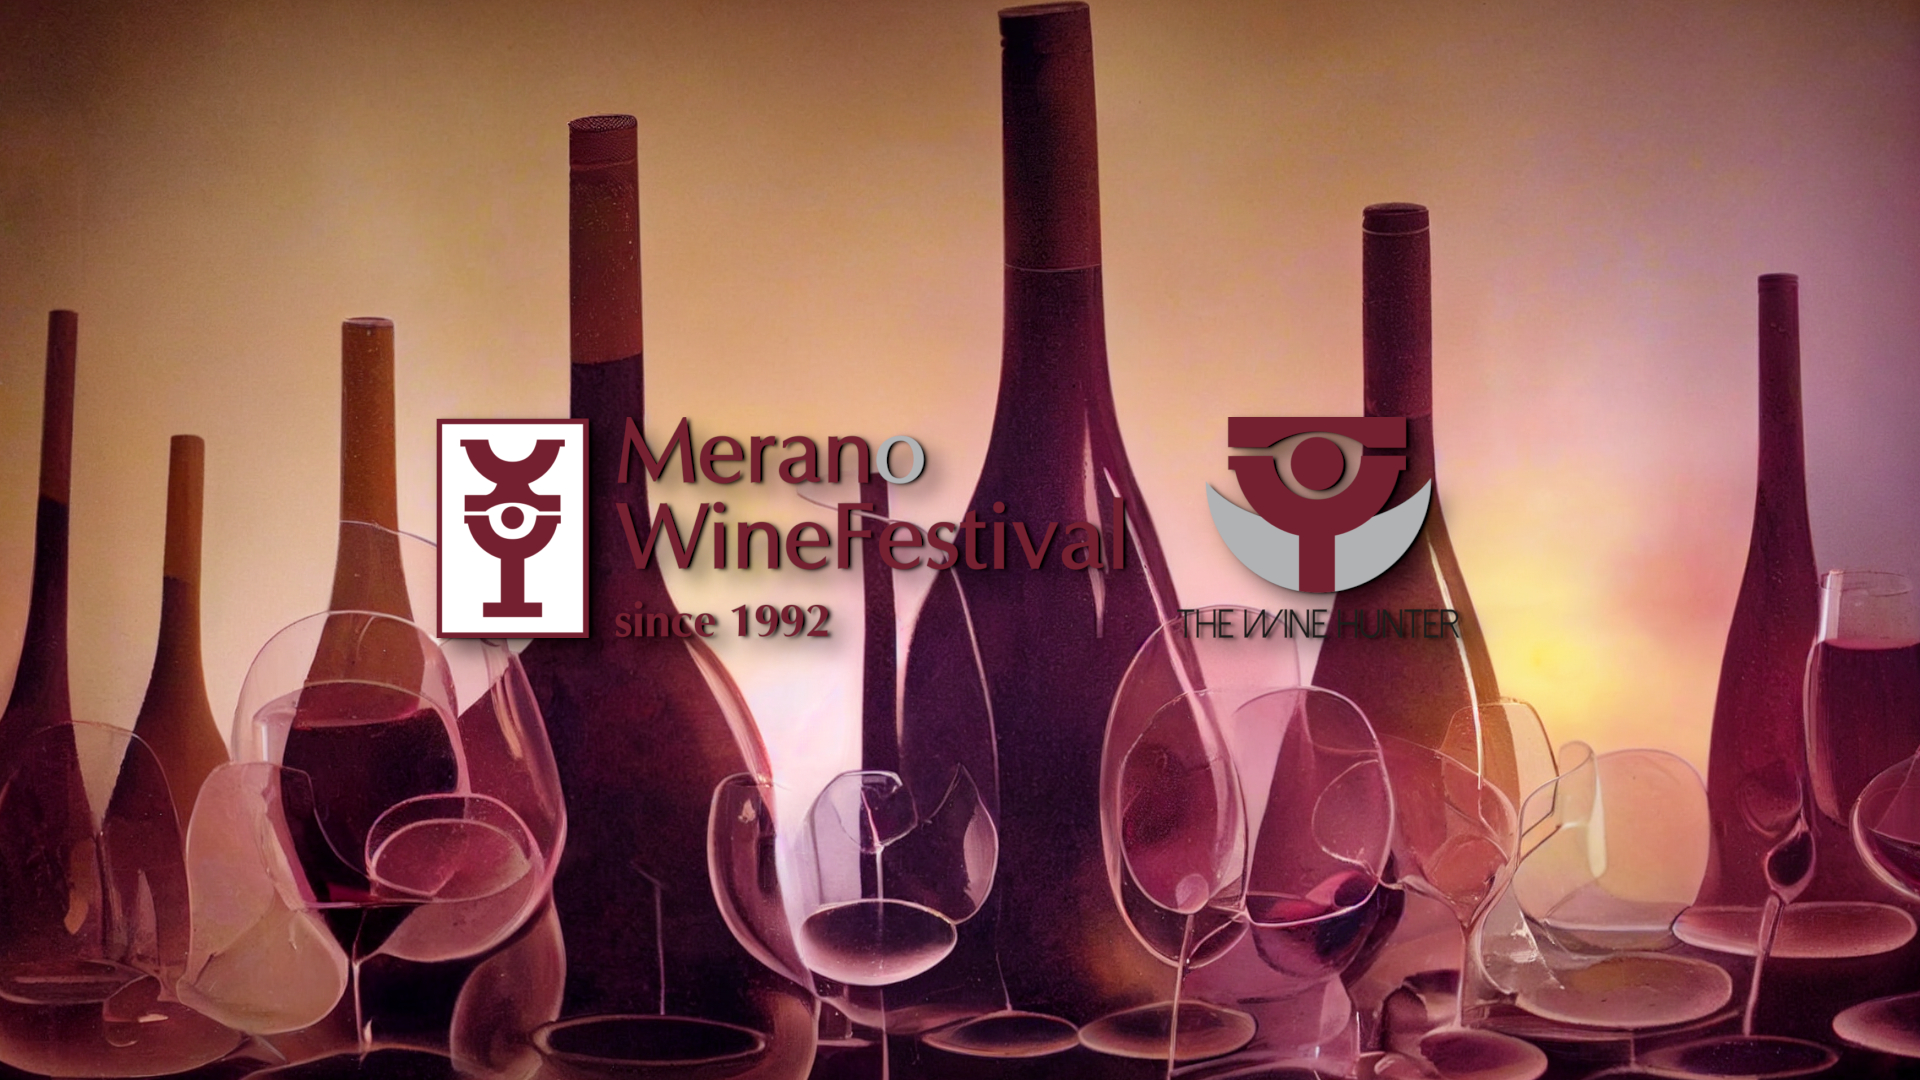 kchai-art kch merano winefestival 2022 Buyering&Financial Club Events